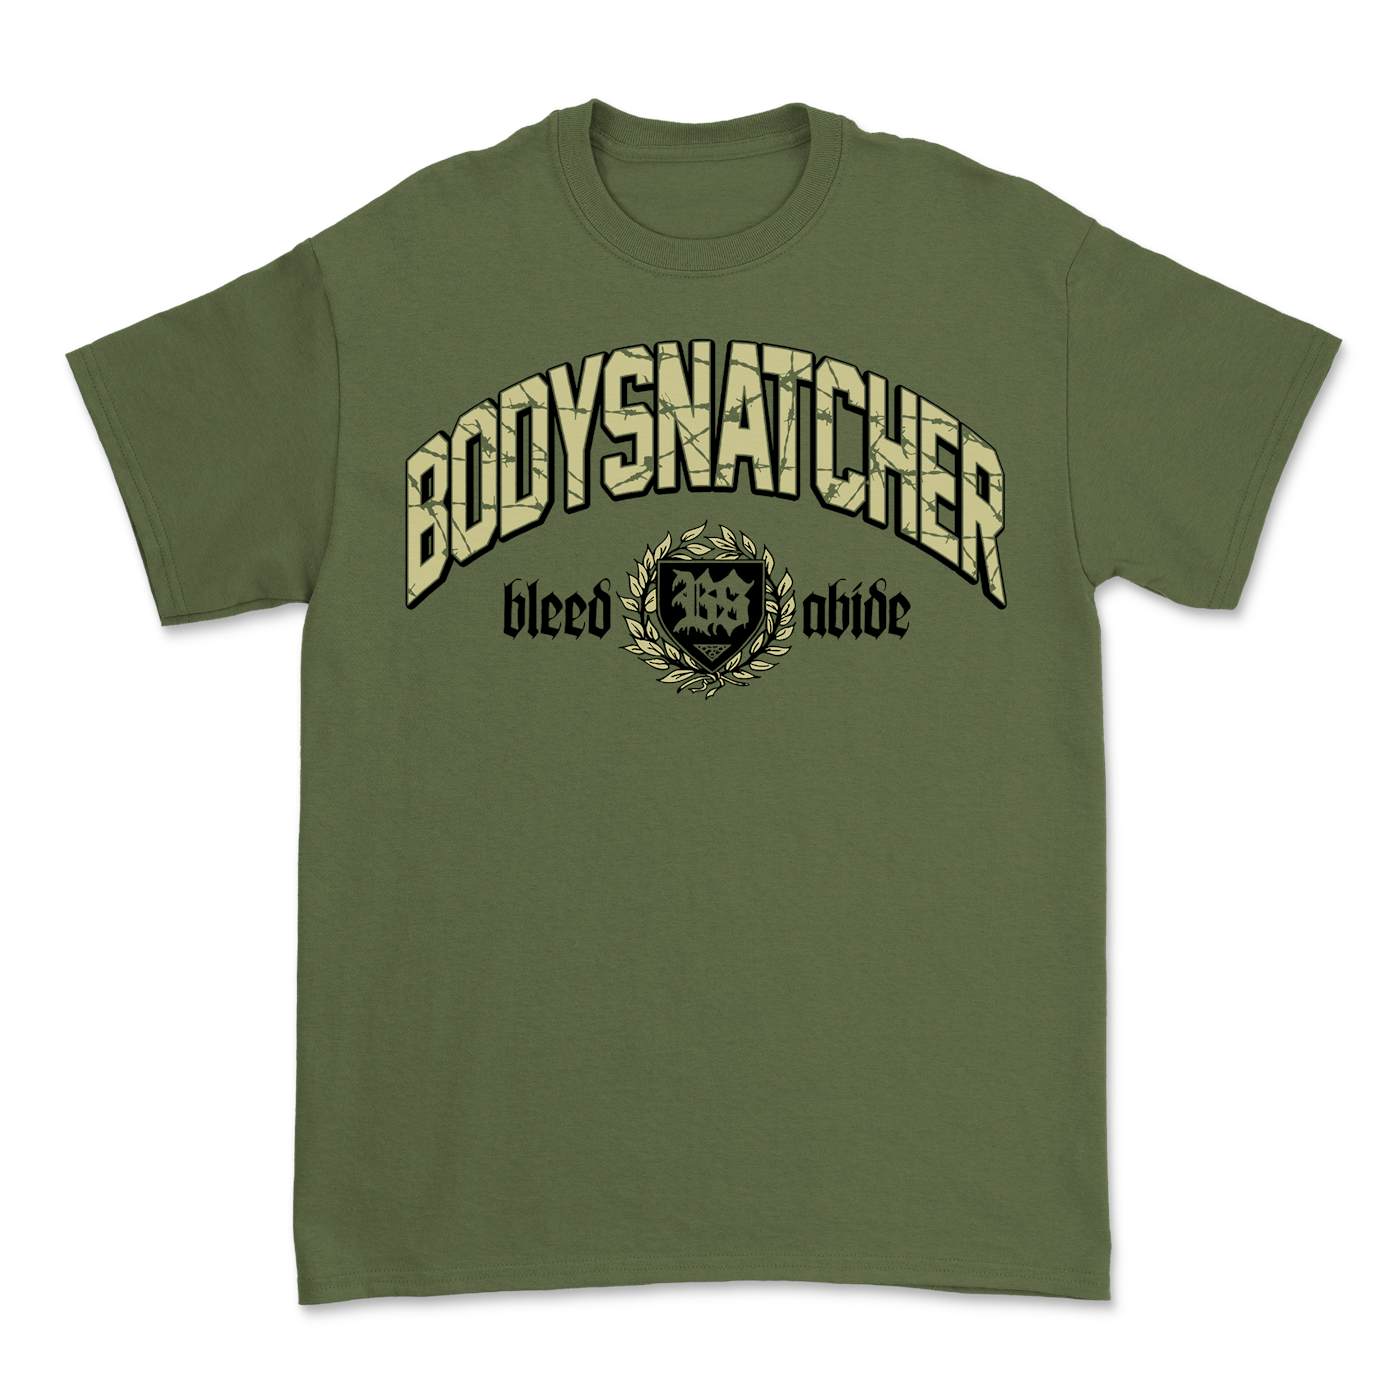 Bodysnatcher Collegiate T-Shirt (Olive)